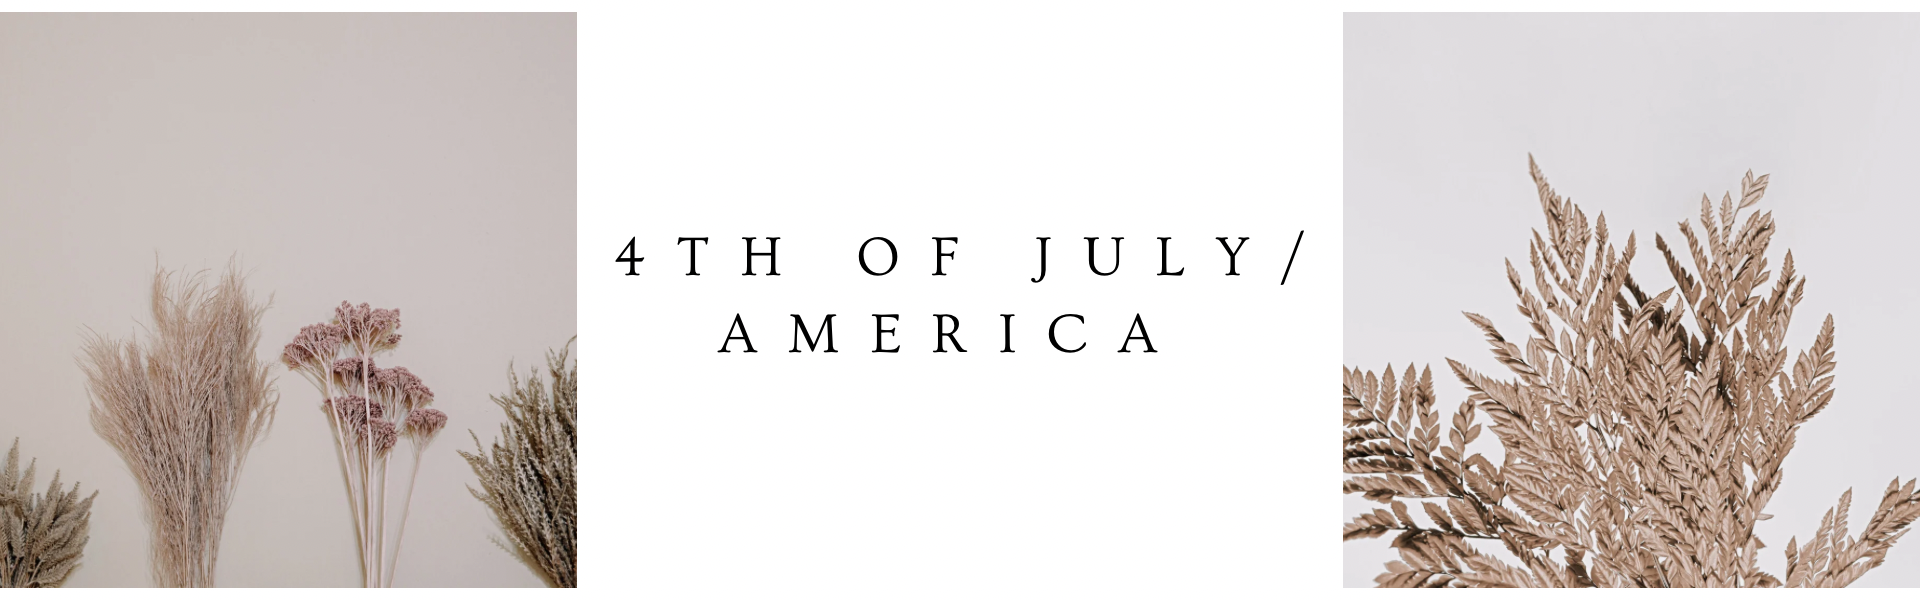 4th of July/America